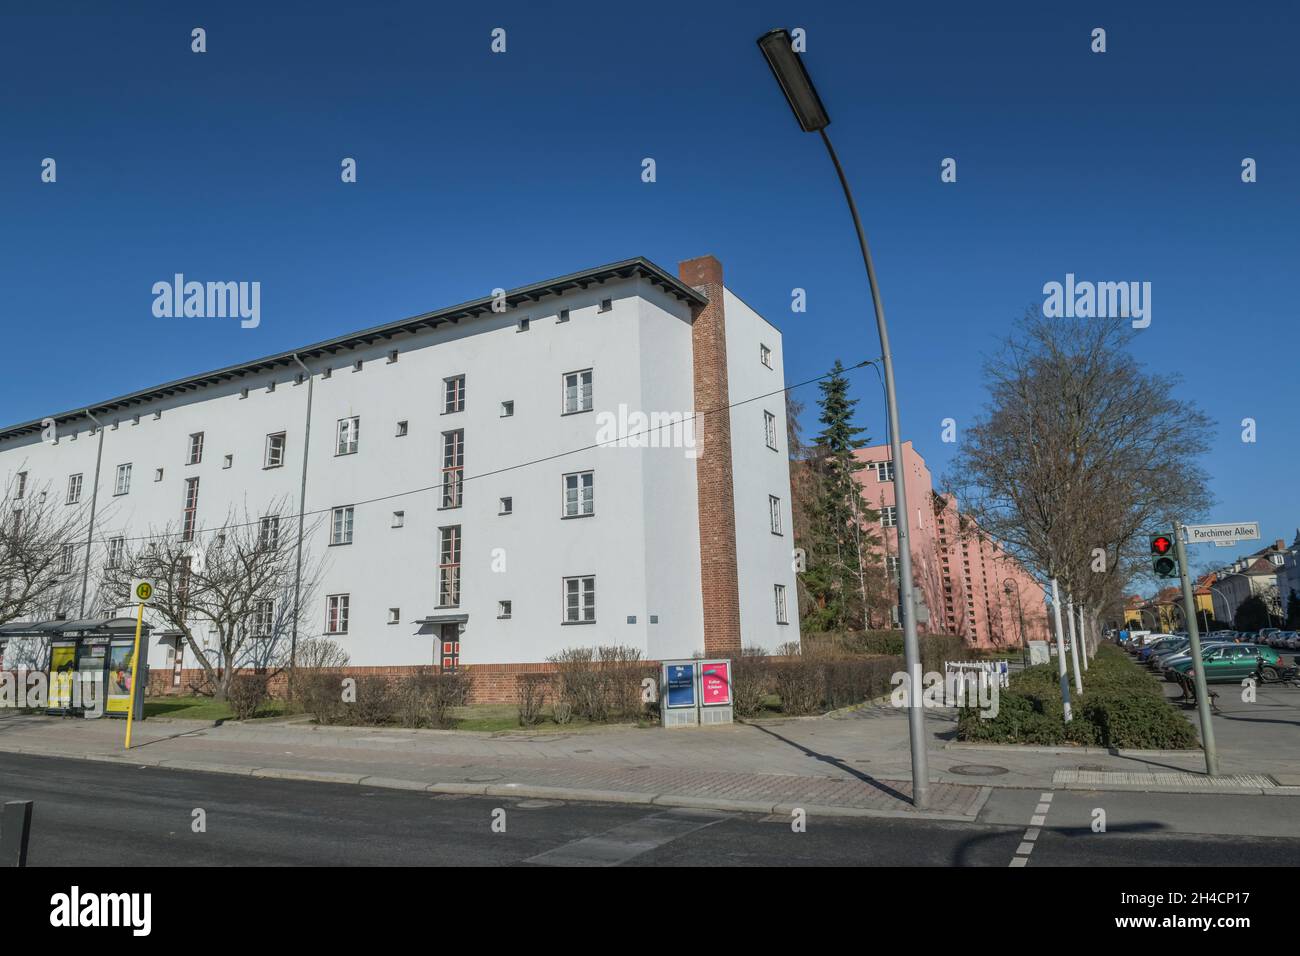 Wohnhäuser, Lowise-Reuter-Ring, Fritz-Reuter-Allee, Hufeisensiedlung, Britz, Neukölln, Berlin, Allemagne Banque D'Images